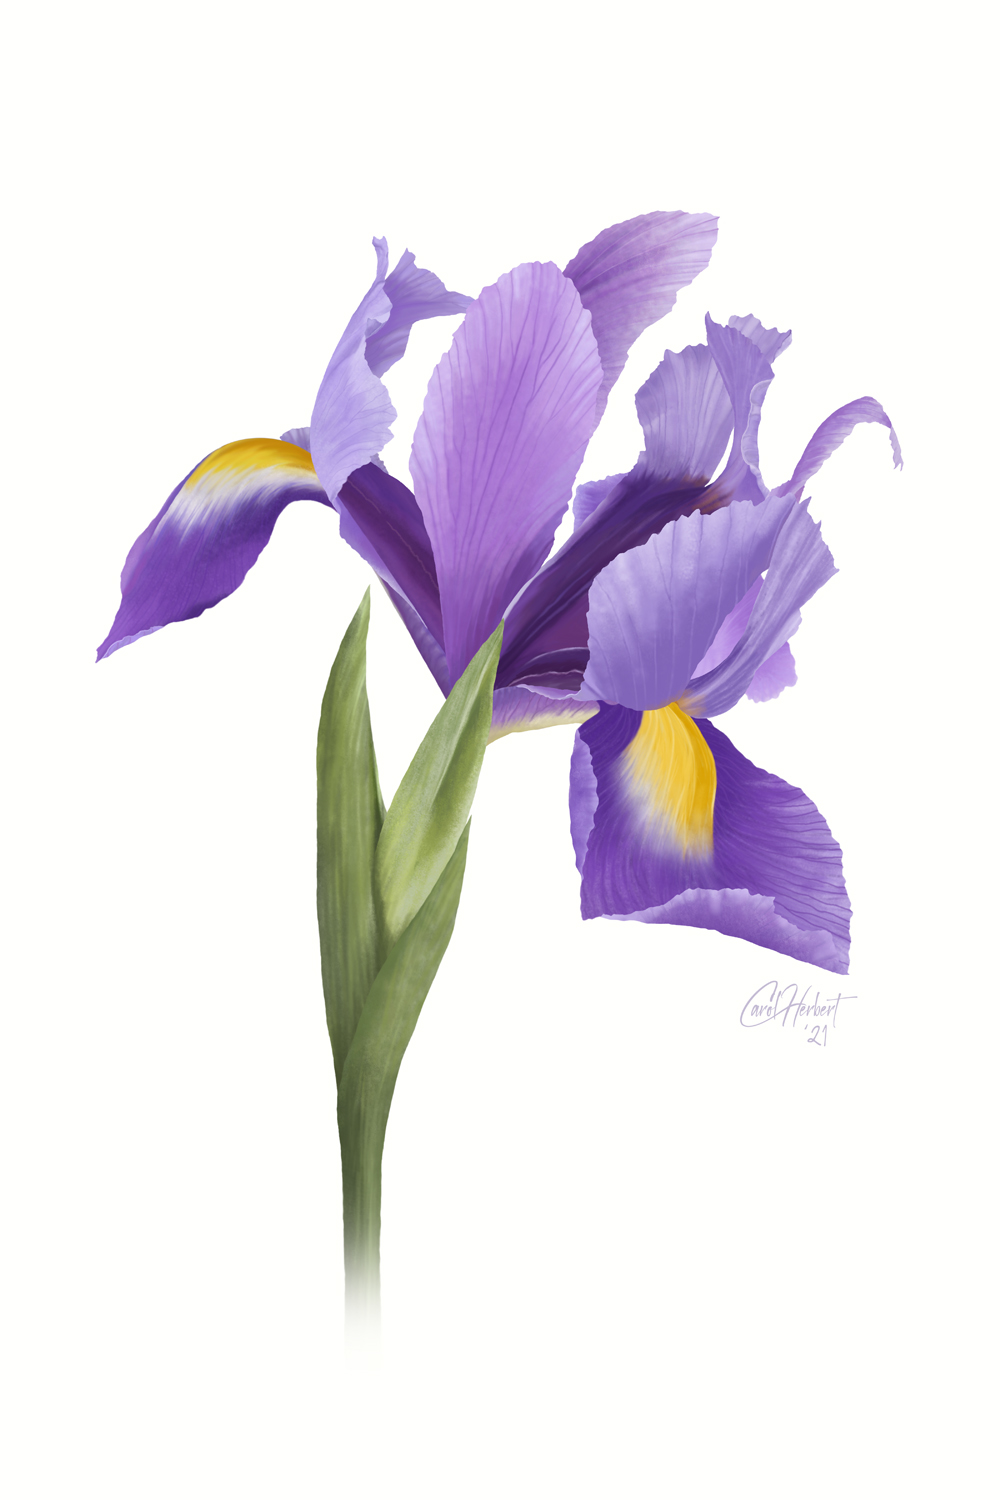 Drawing of a single Iris Flower